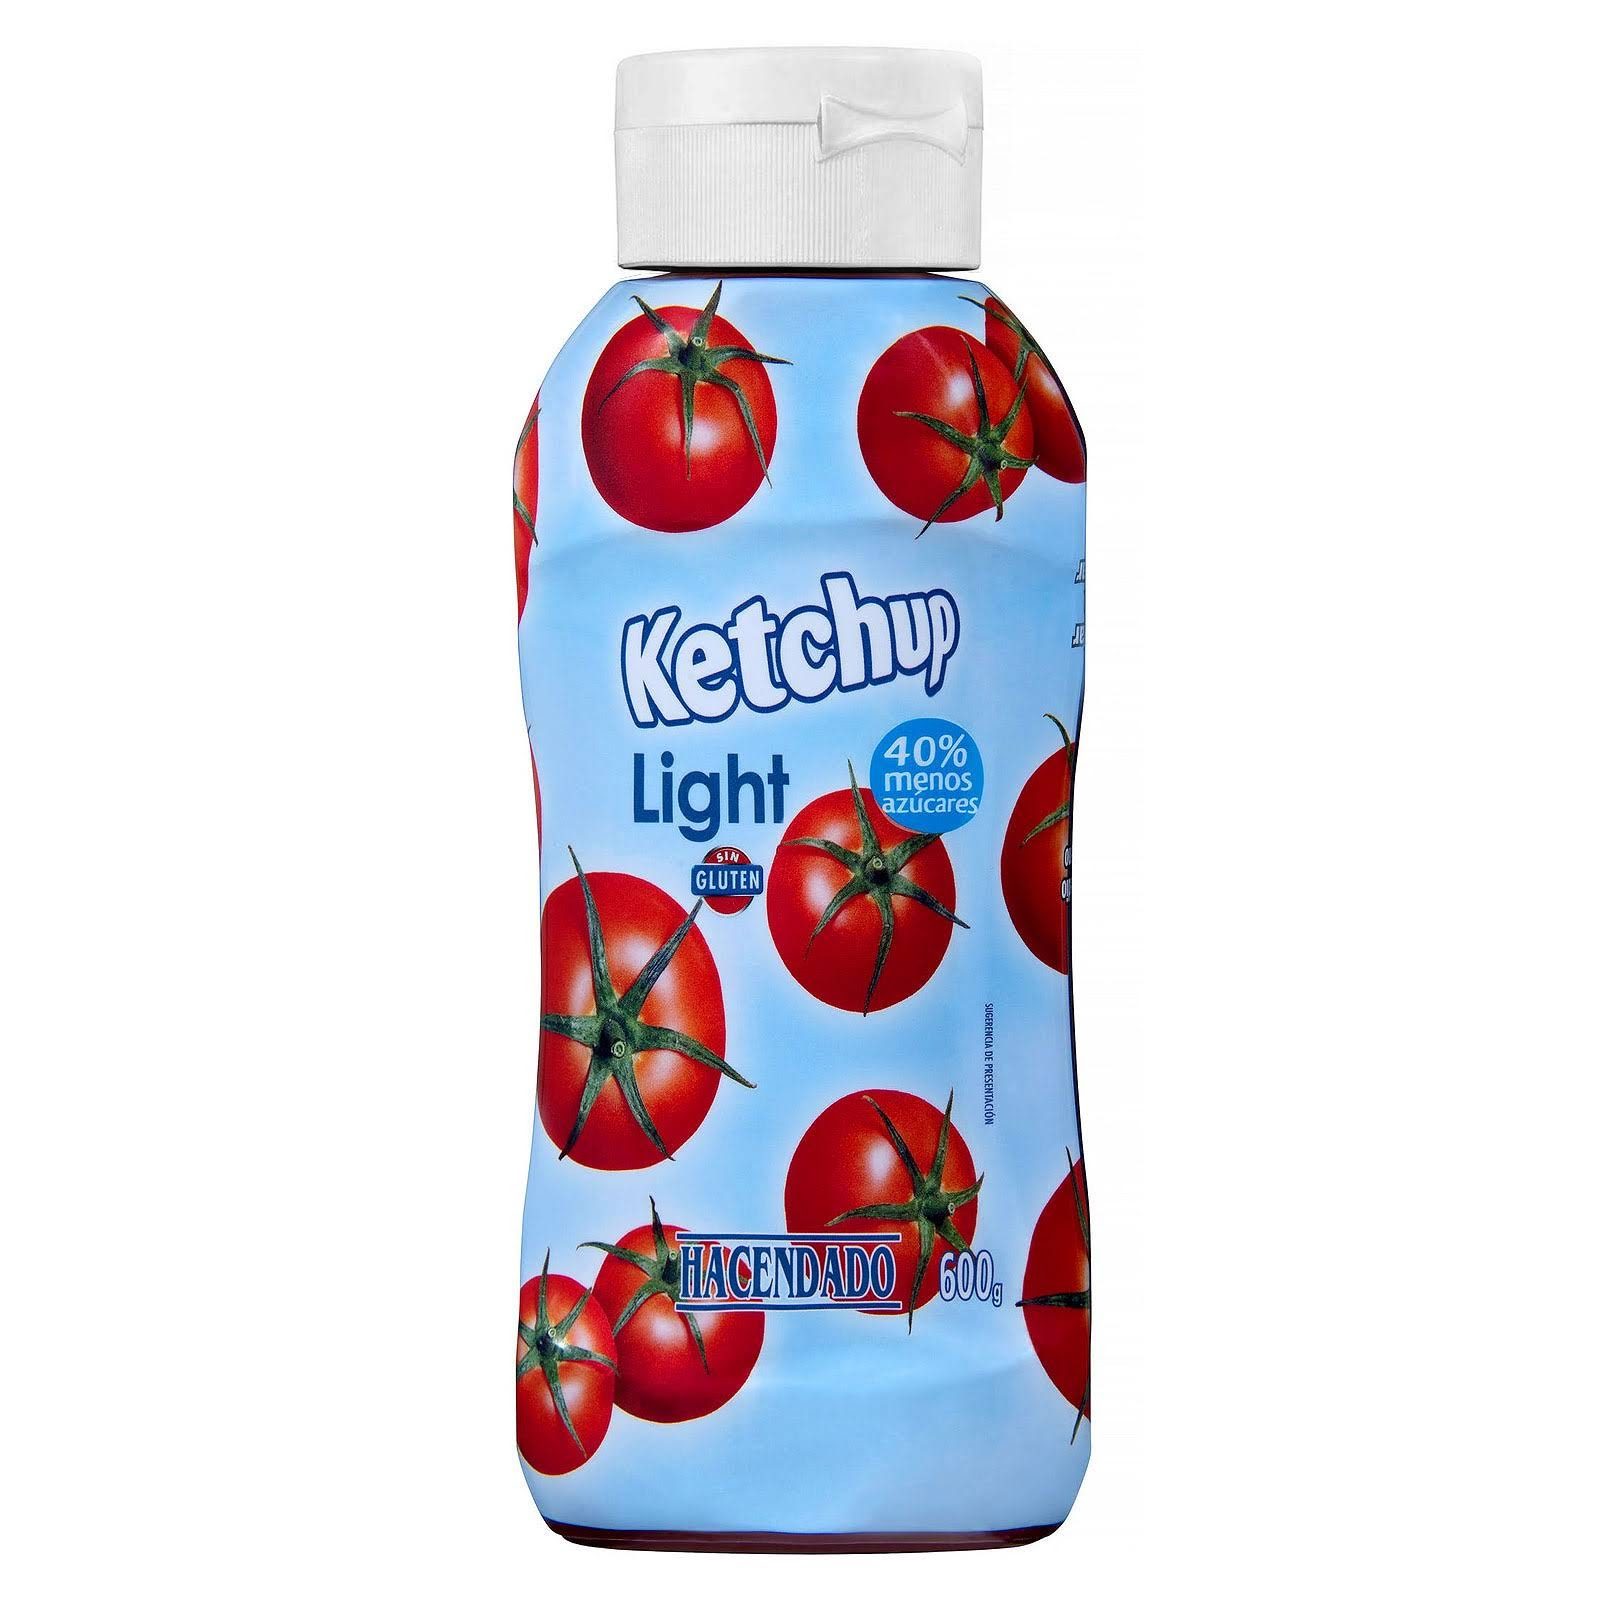 ketchup-light-hacendado-mercadona-1-8560215